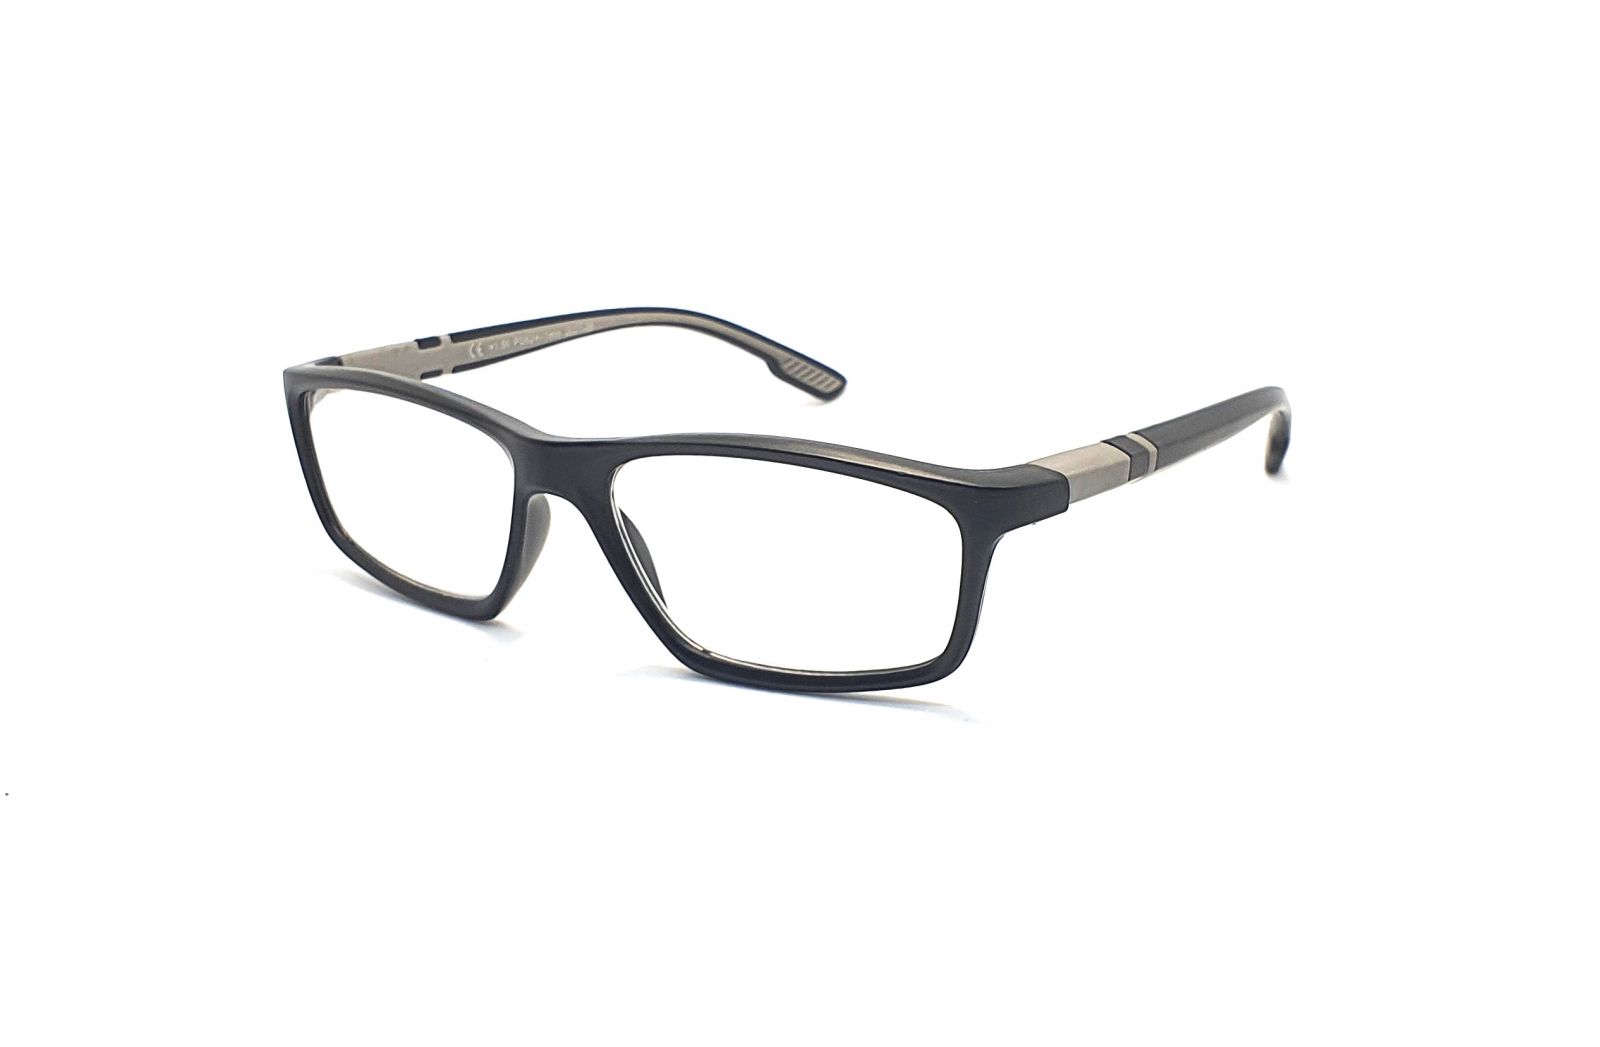 INfocus Dioptrické brýle R2075 / +1,50 black-grey